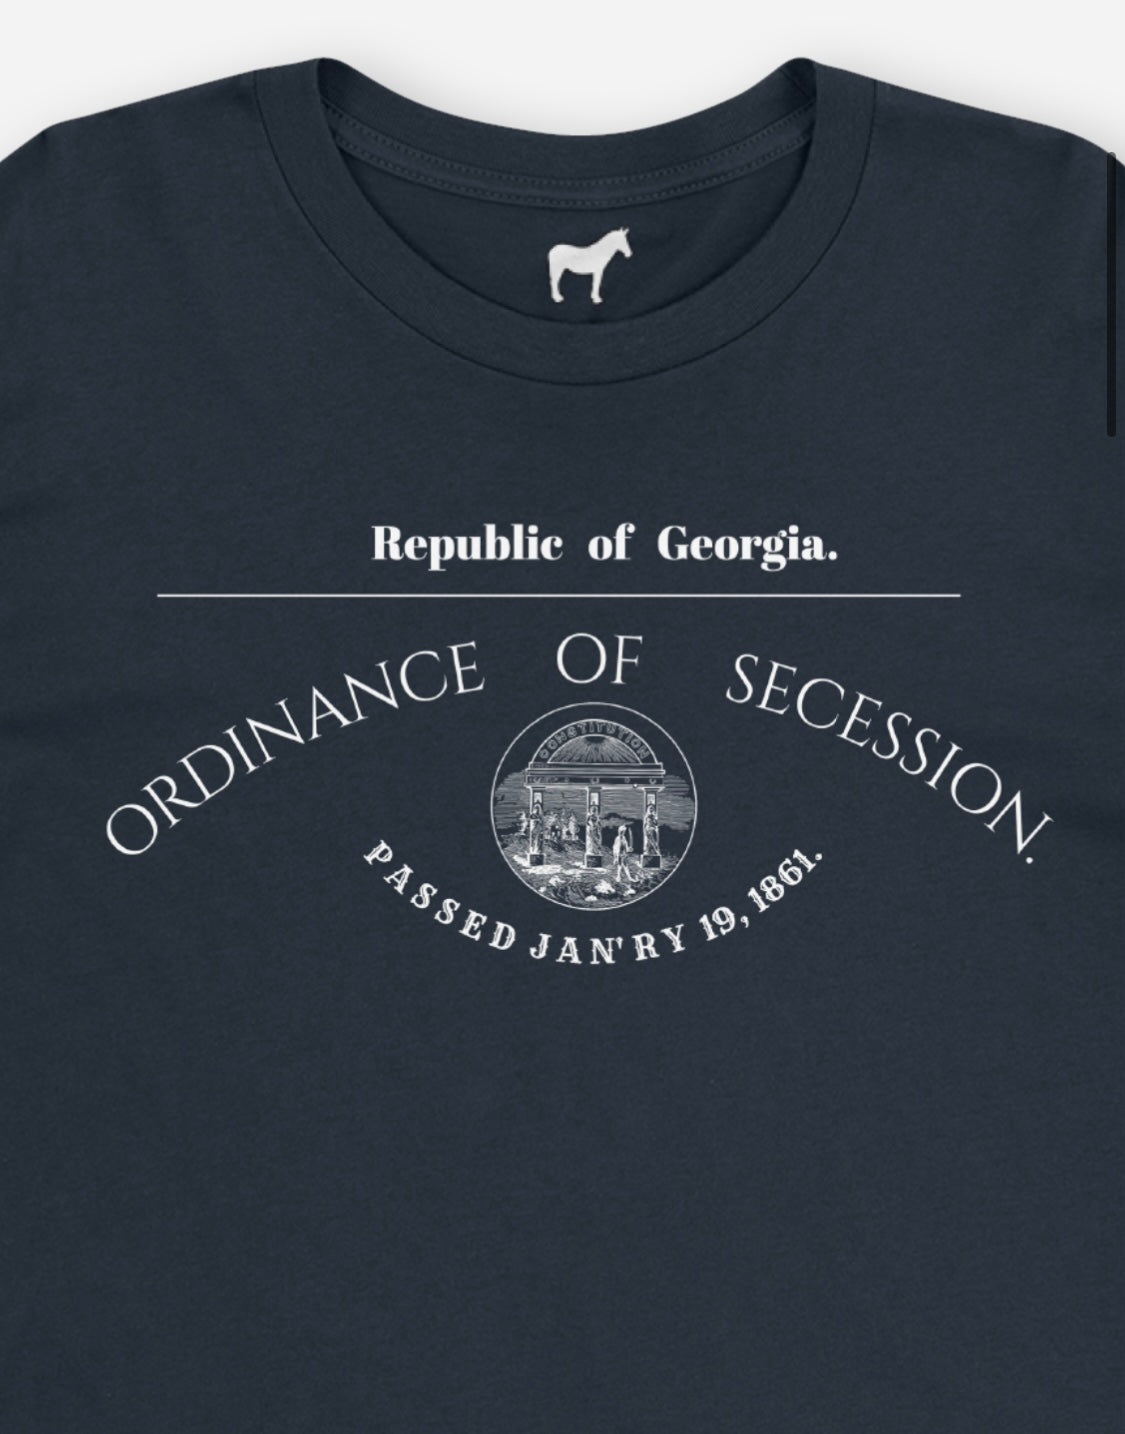 Republic of Georgia - Secession Ordinance Shirt